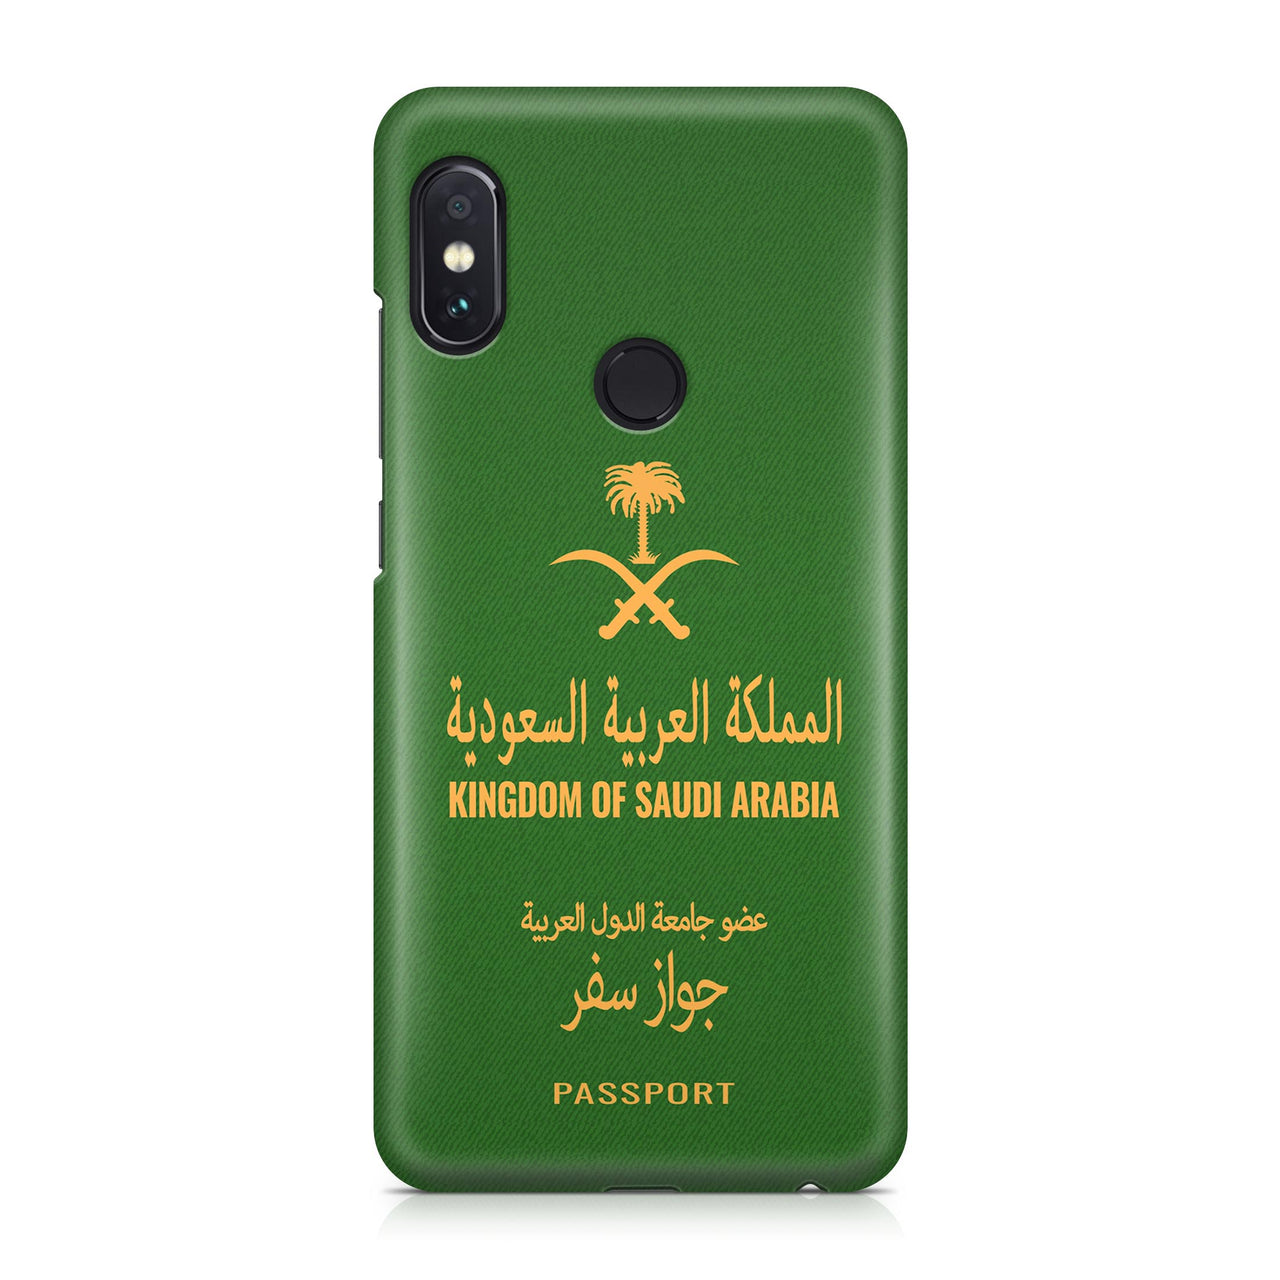 Kingdom of Saudi Arabia Passport Designed Xiaomi Cases